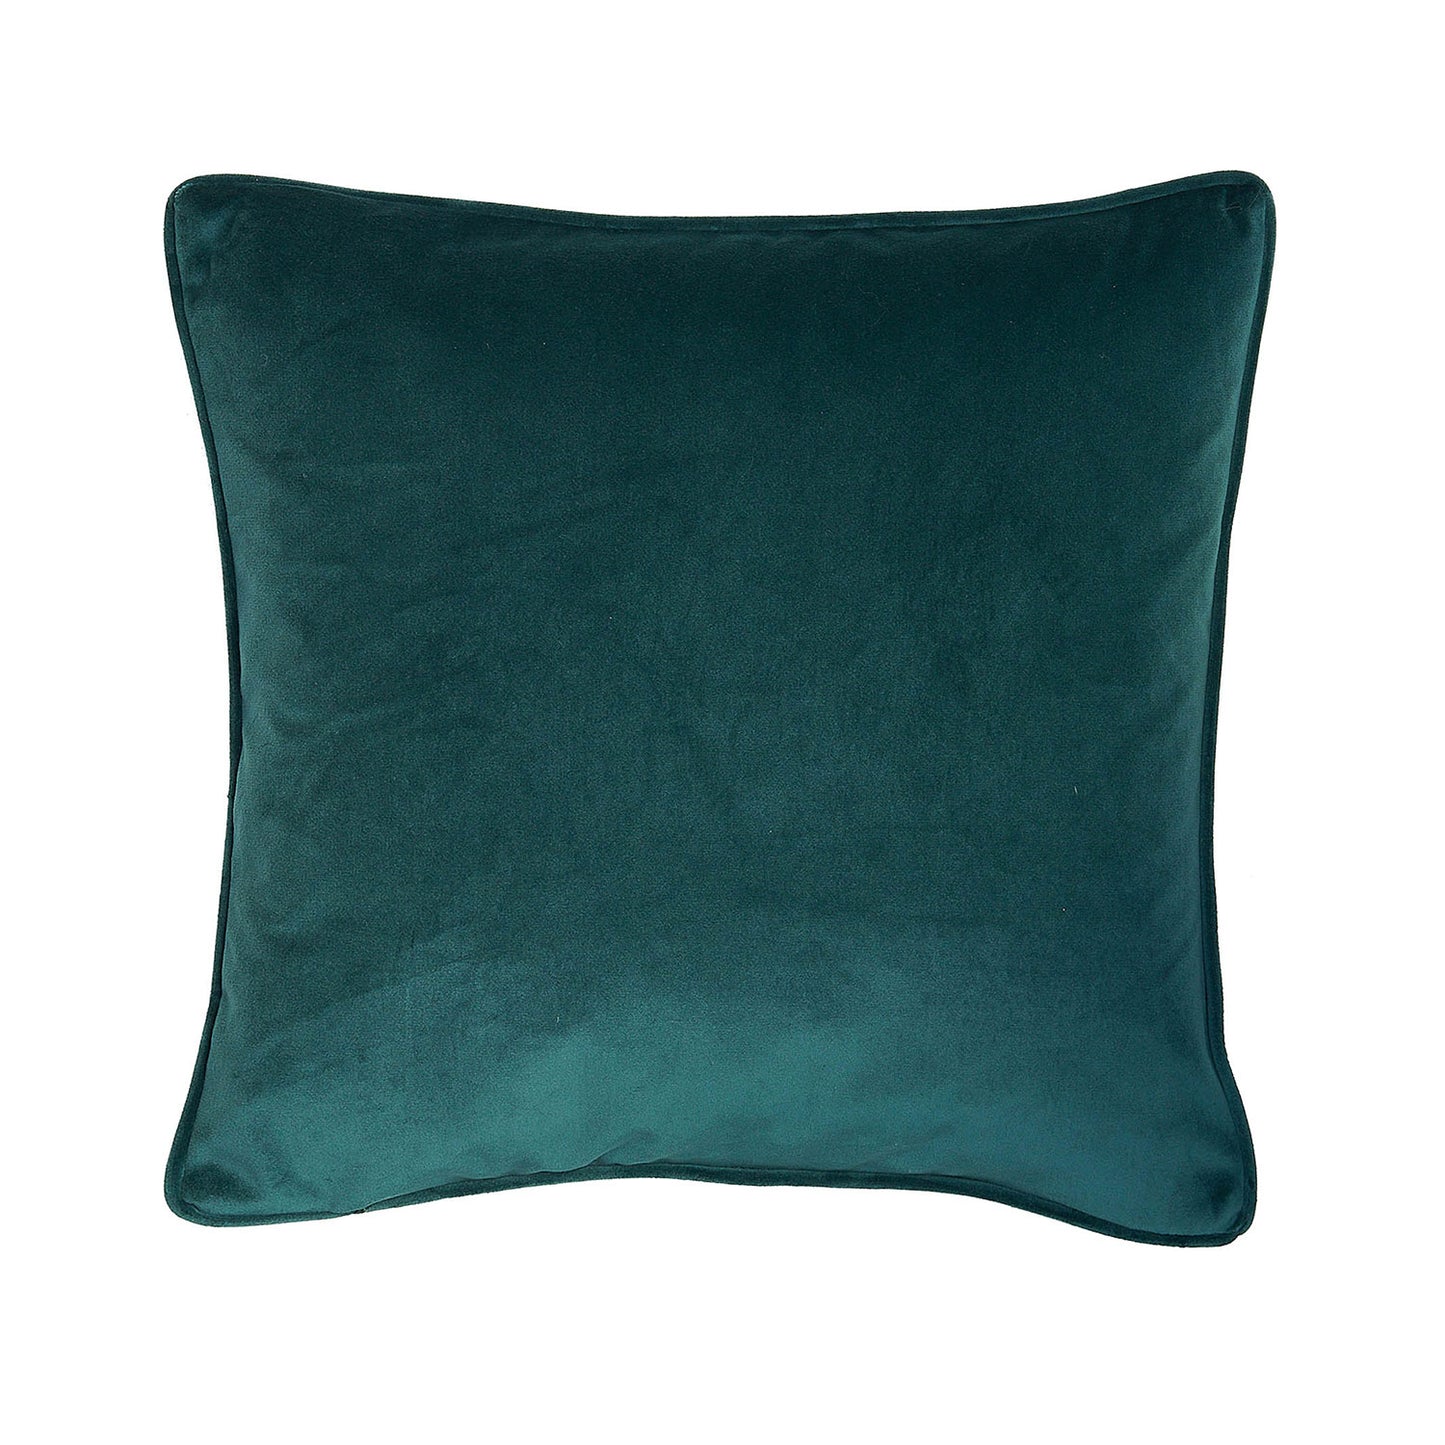 Clarissa Hulse Maidenhair Vine Peacock Velvet Cushion (43cm x 43cm)